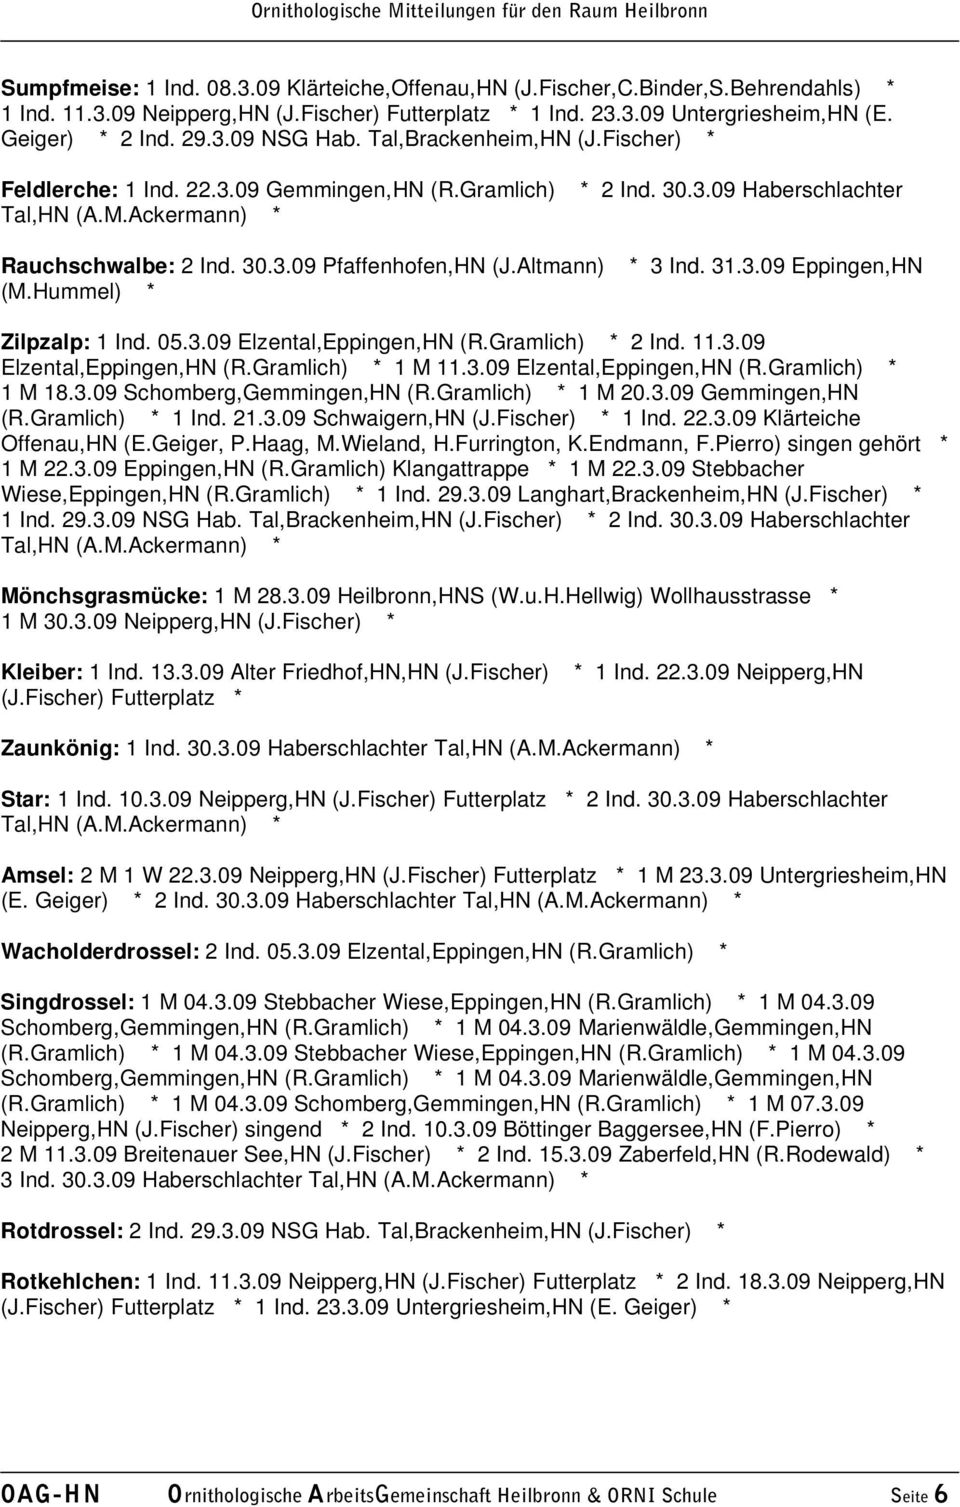 31.3.09 Eppingen,HN Zilpzalp: 1 Ind. 05.3.09 Elzental,Eppingen,HN (R.Gramlich) * 2 Ind. 11.3.09 Elzental,Eppingen,HN (R.Gramlich) * 1 M 11.3.09 Elzental,Eppingen,HN (R.Gramlich) * 1 M 18.3.09 Schomberg,Gemmingen,HN (R.